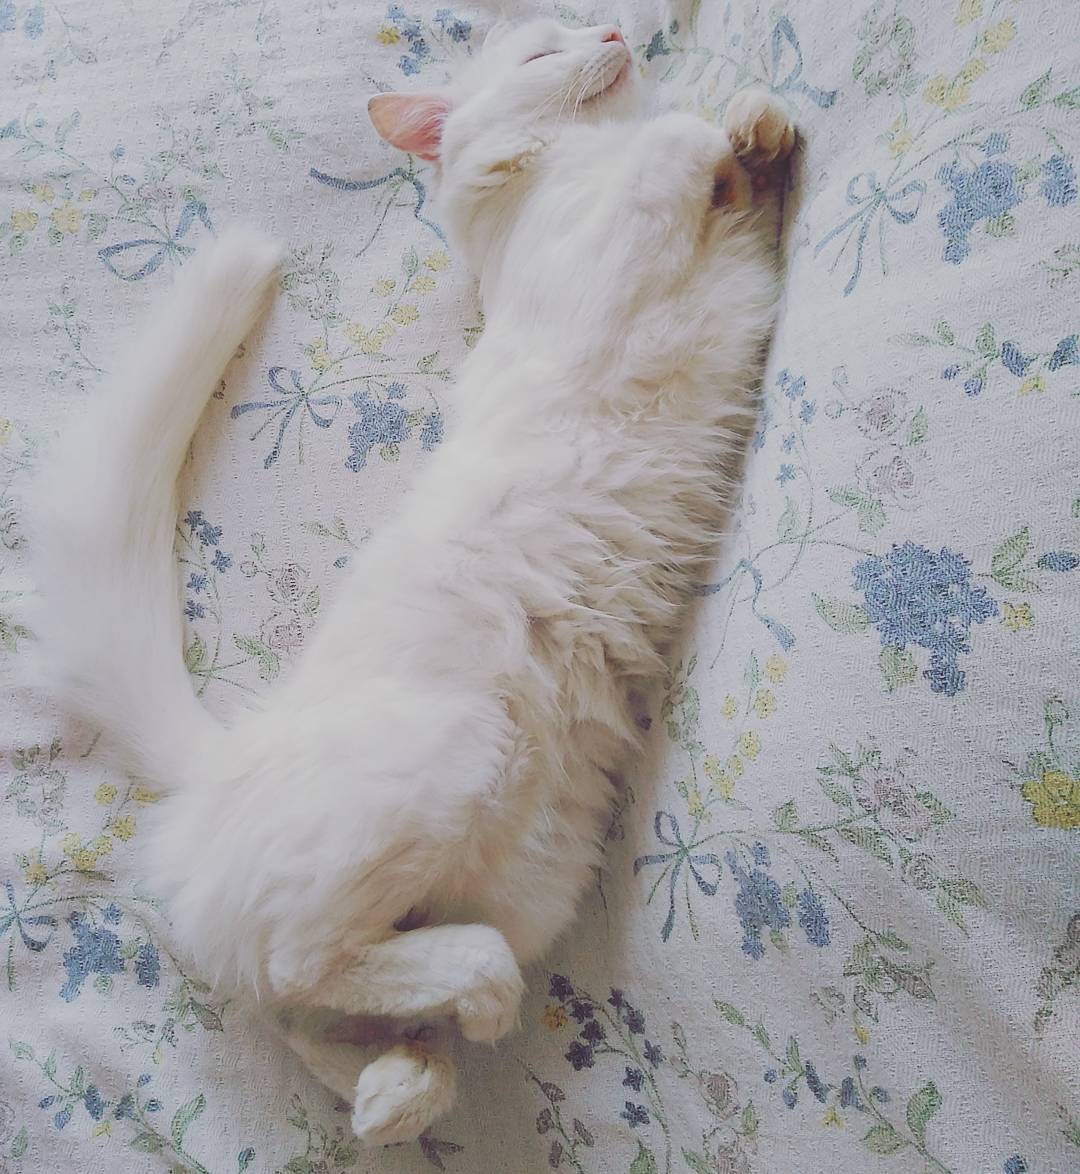 kedi-alos-instagram-sasi-kediler-patiliyo-8